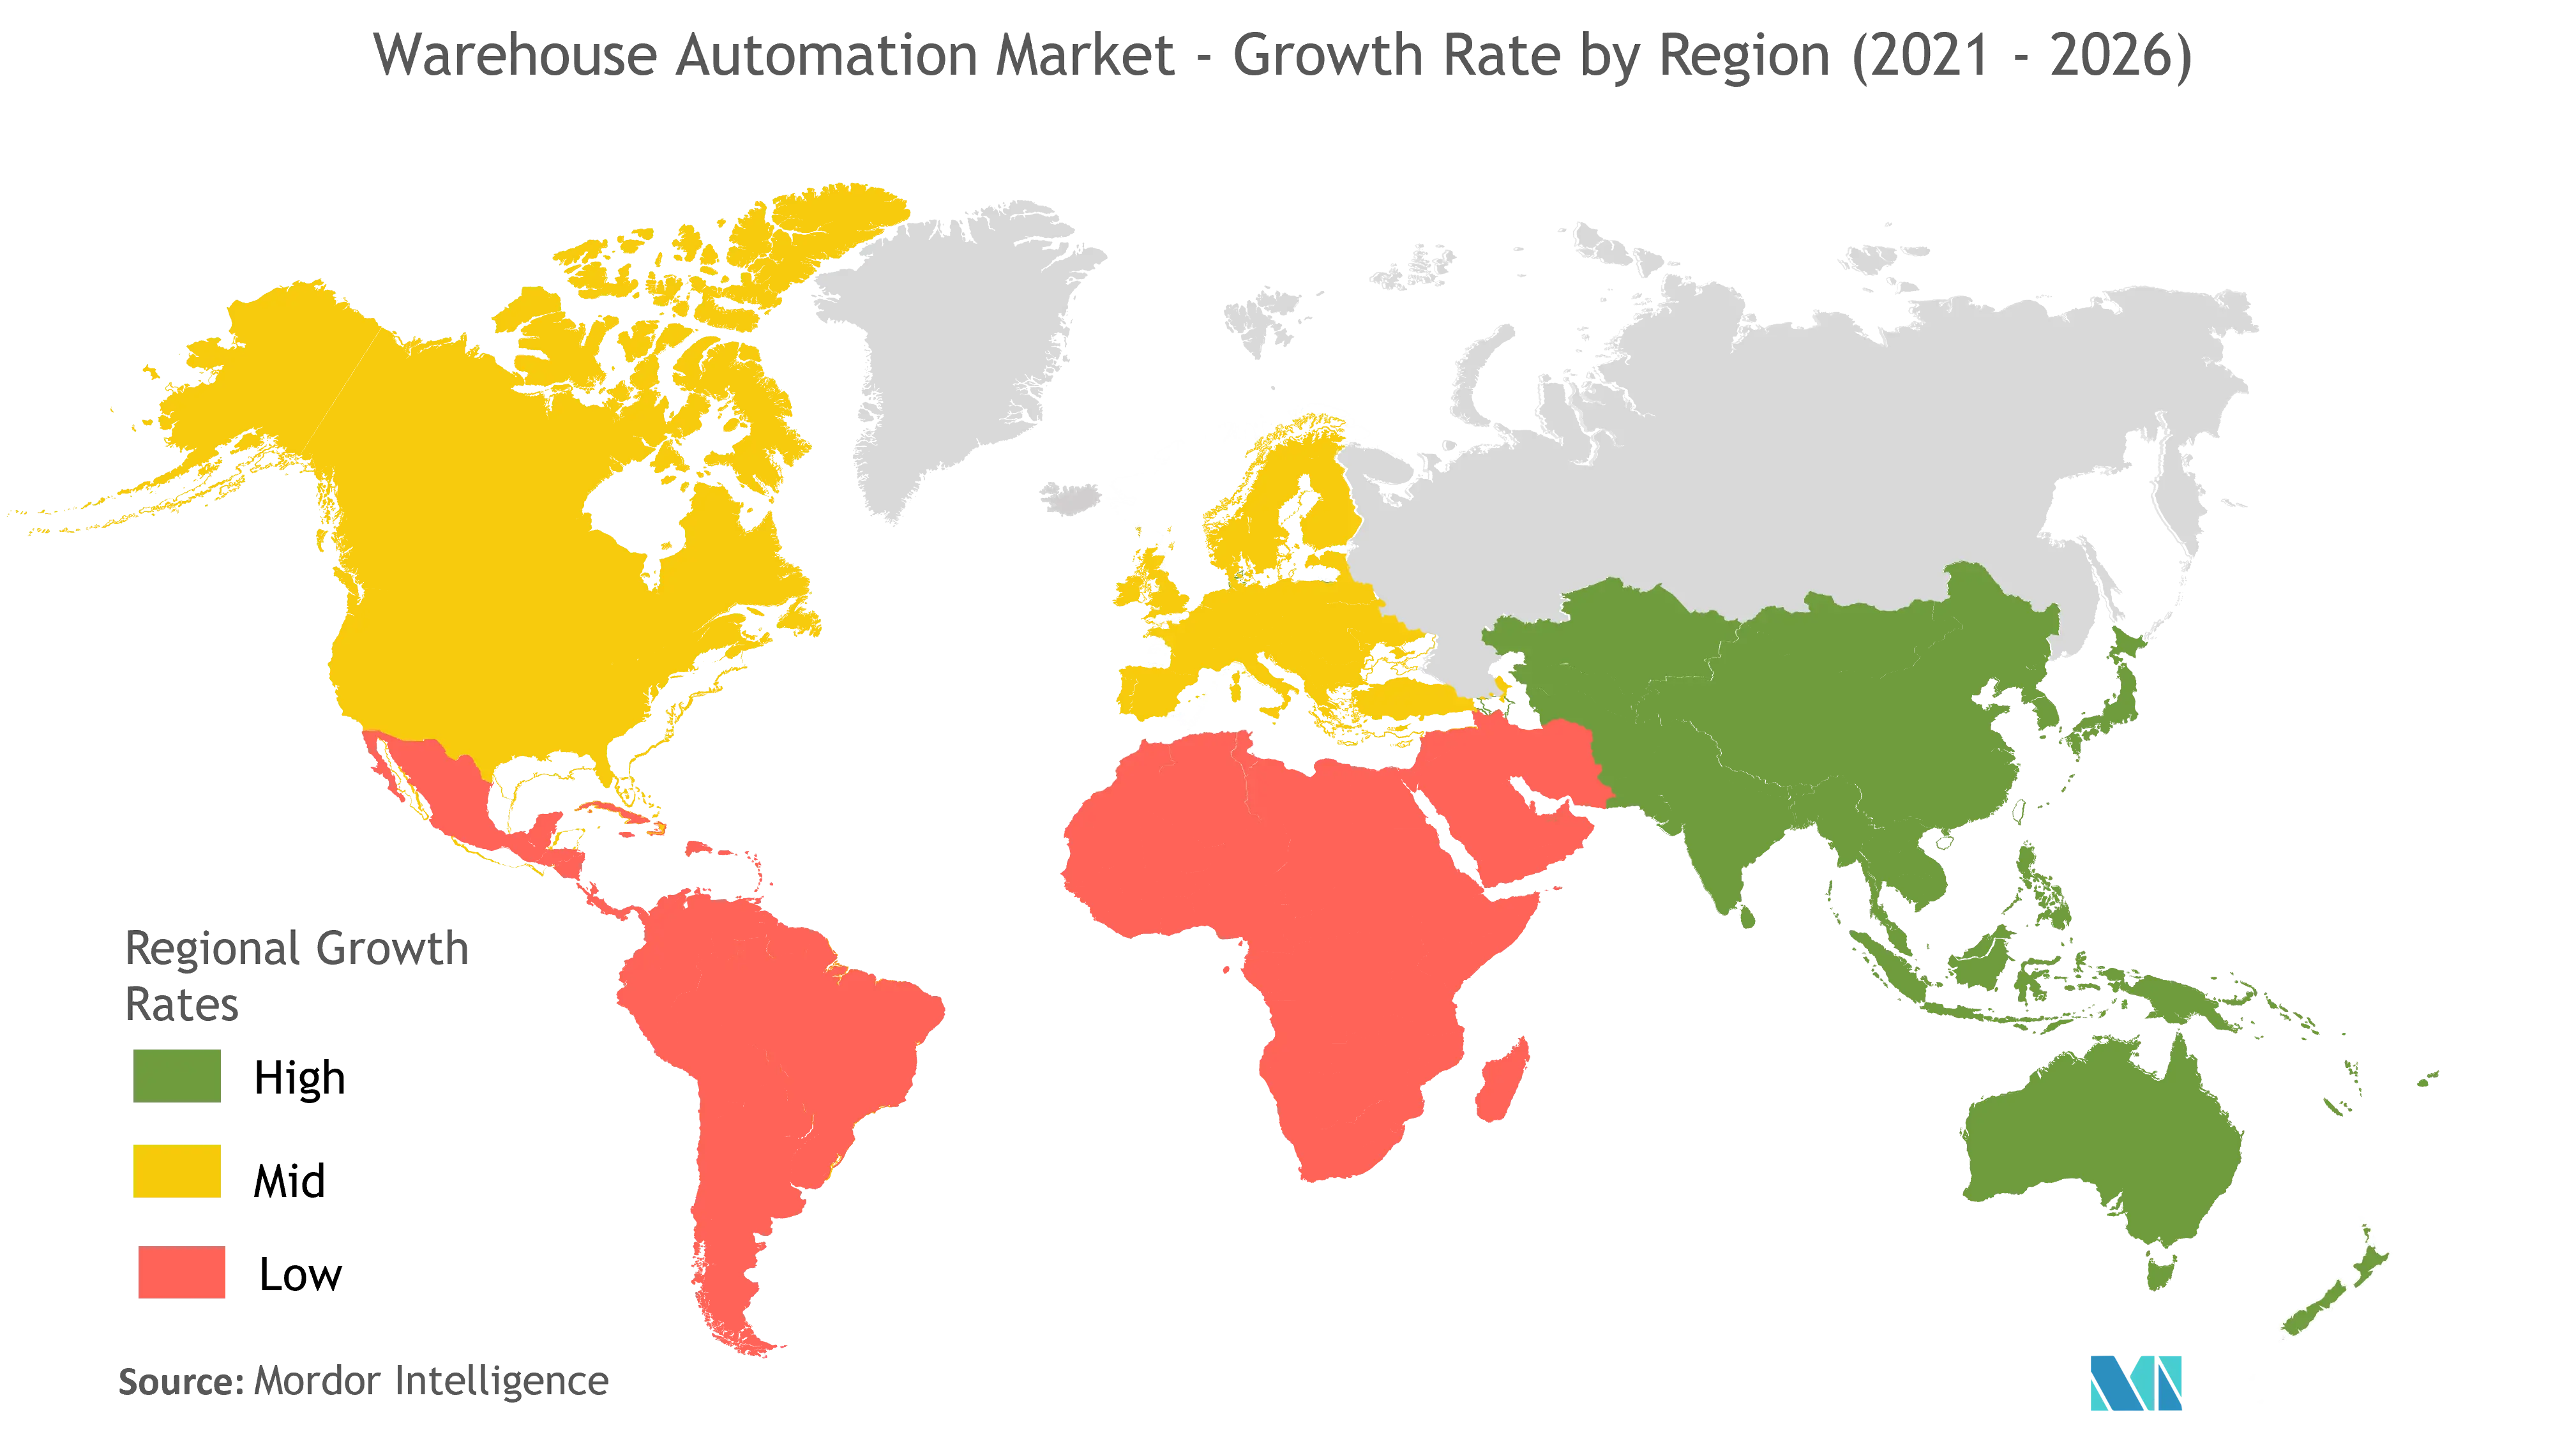 Warehouse Automation Market Growth